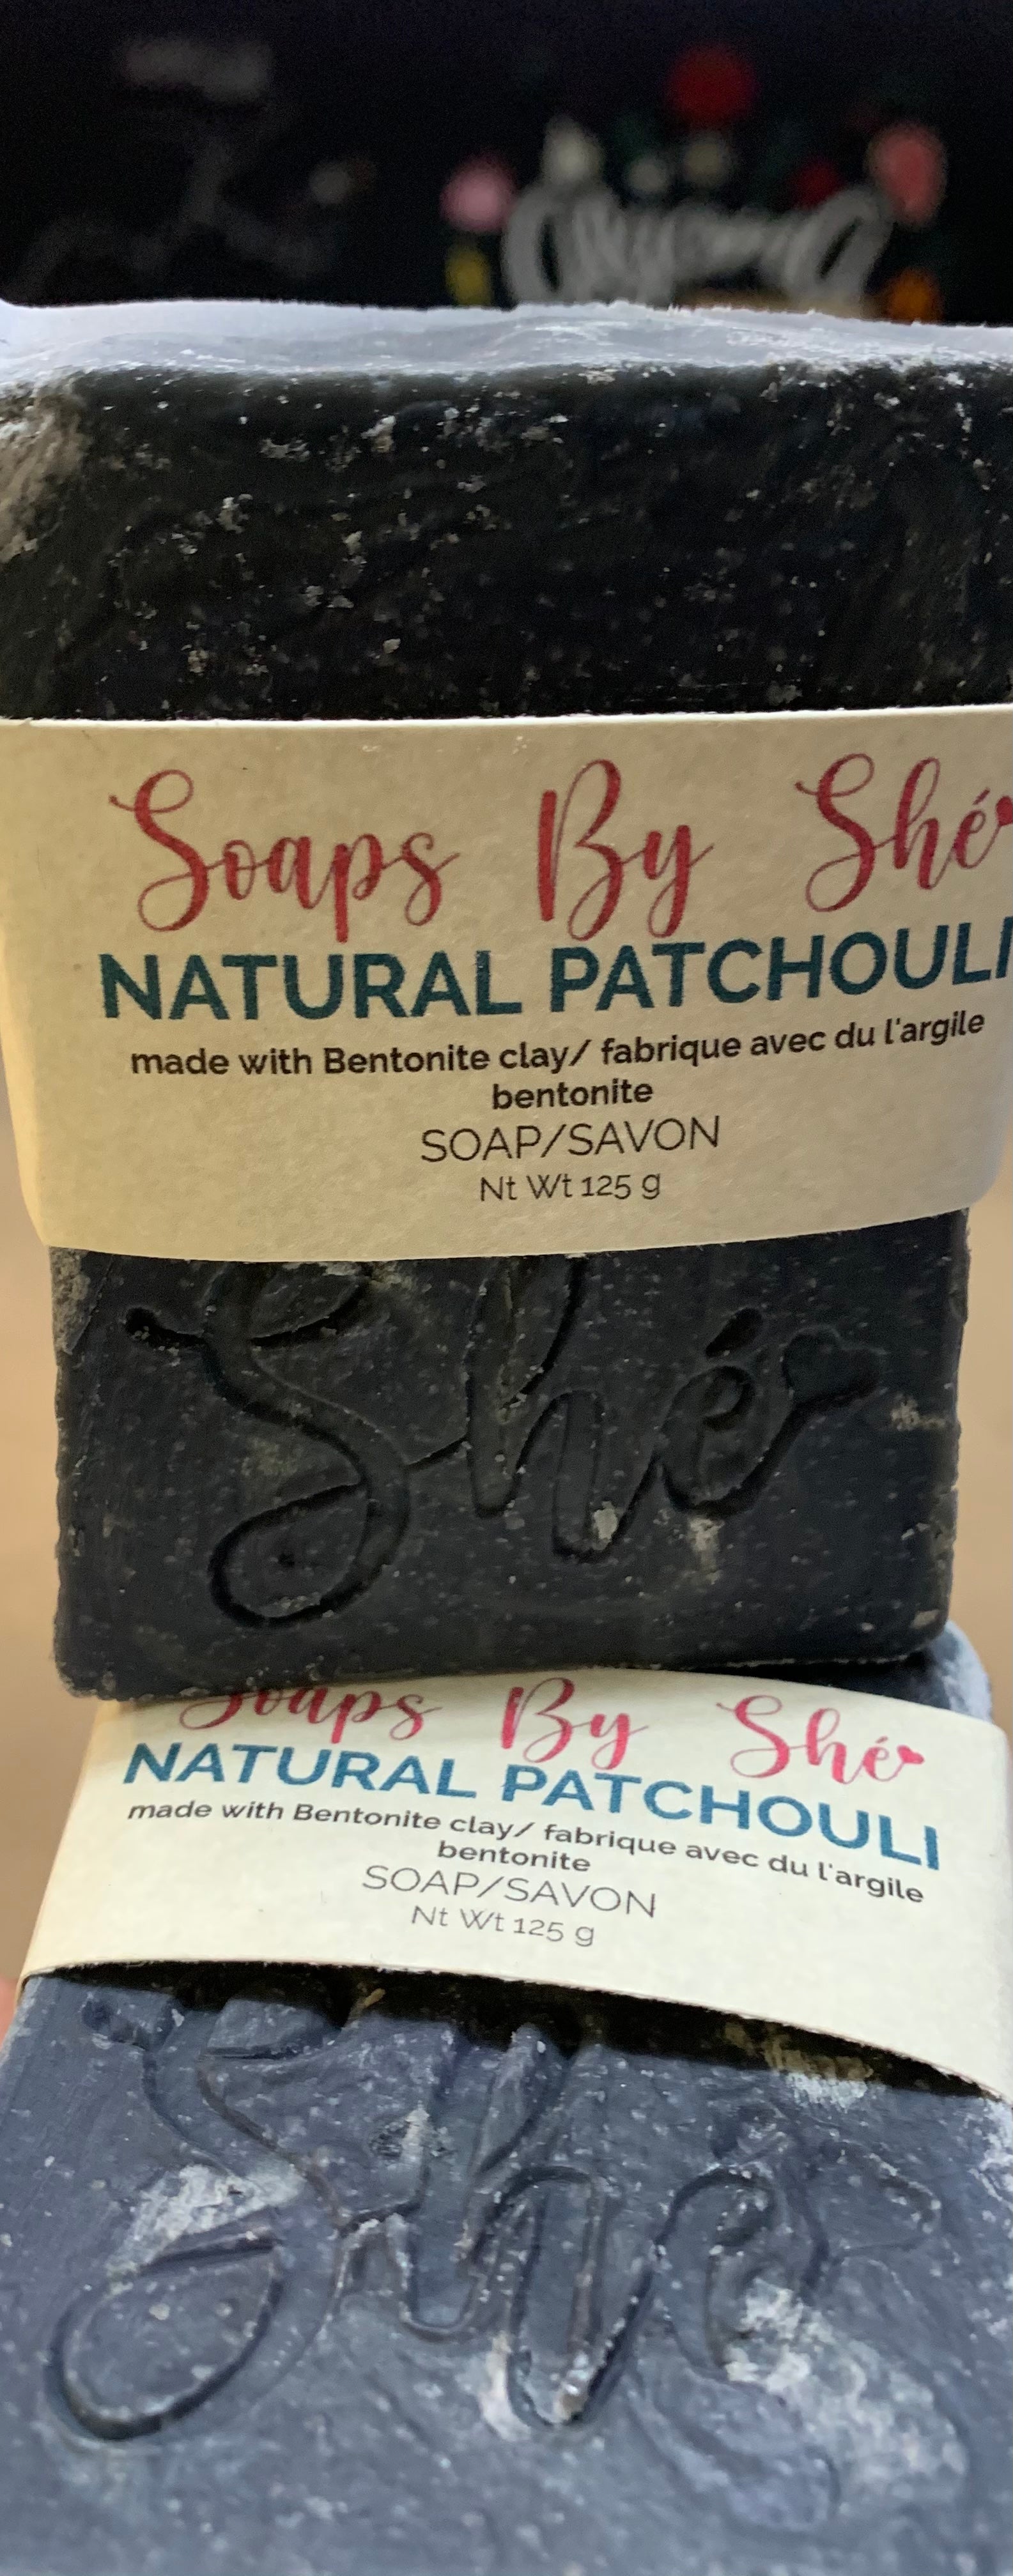 Natural Patchouli Handmade Soap